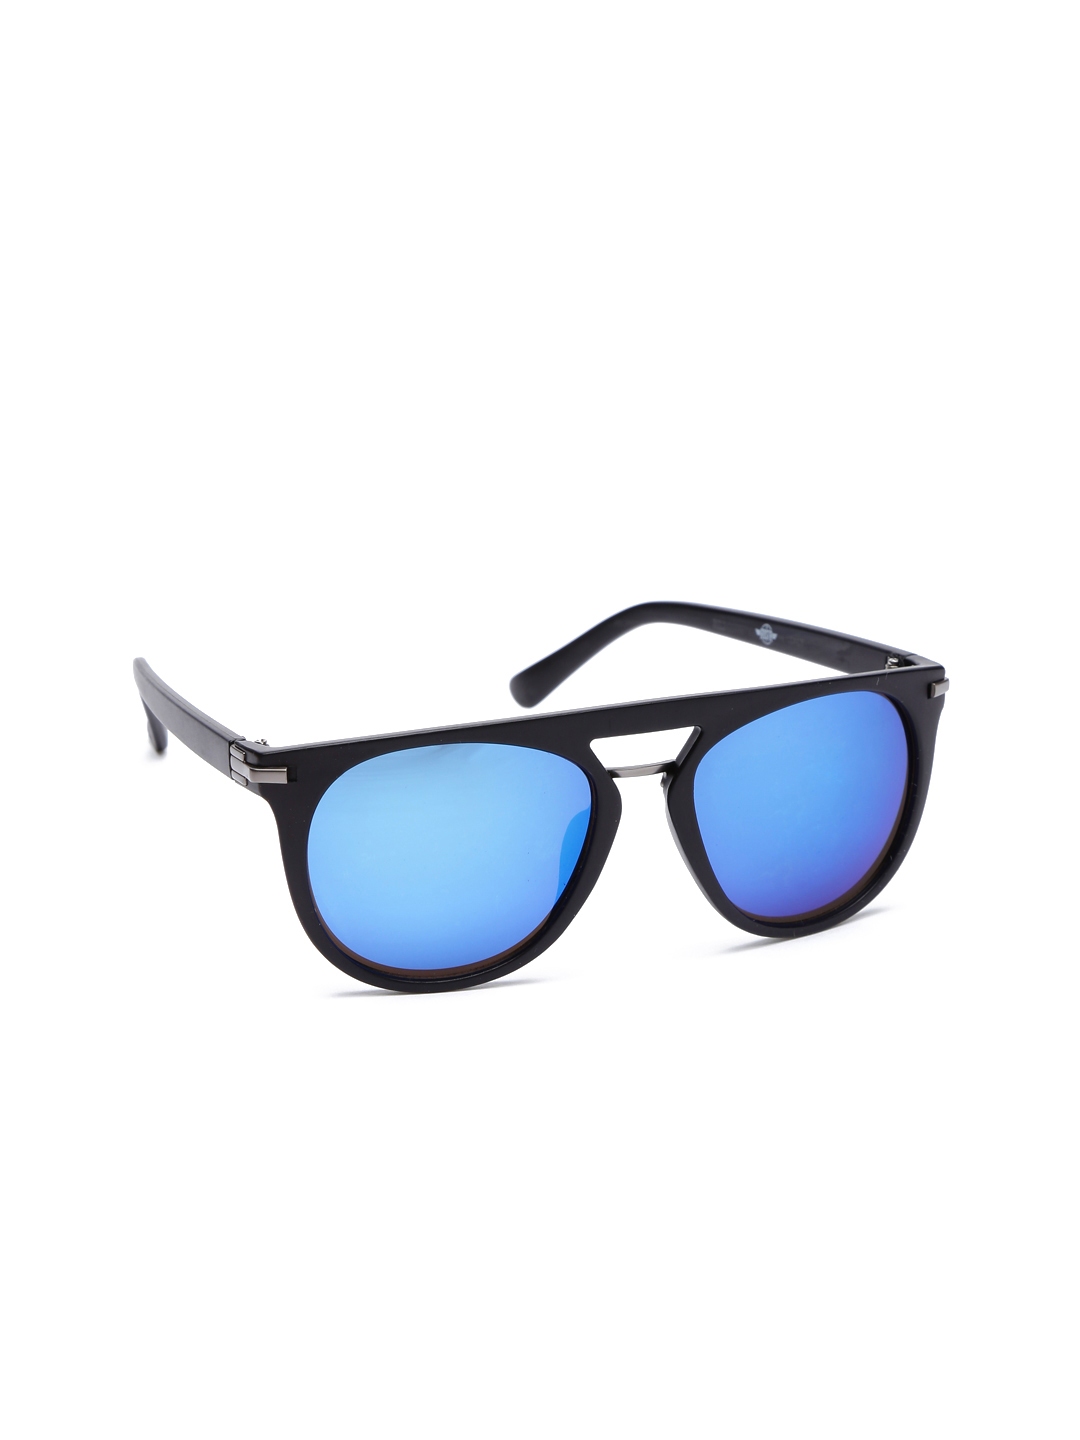 Buy Roadster Unisex Oval Sunglasses SUN04812 - Sunglasses for Unisex